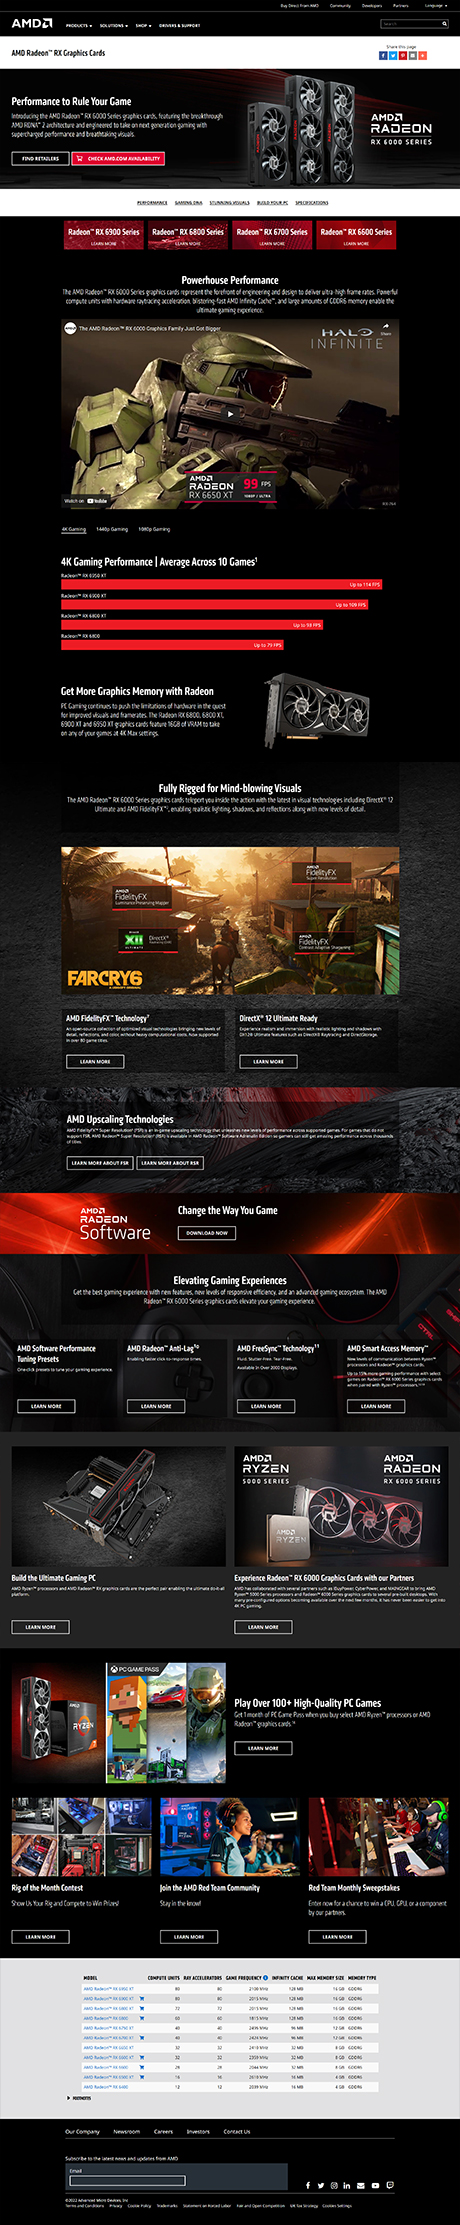 AMD Radeon RX Graphics Cards web page